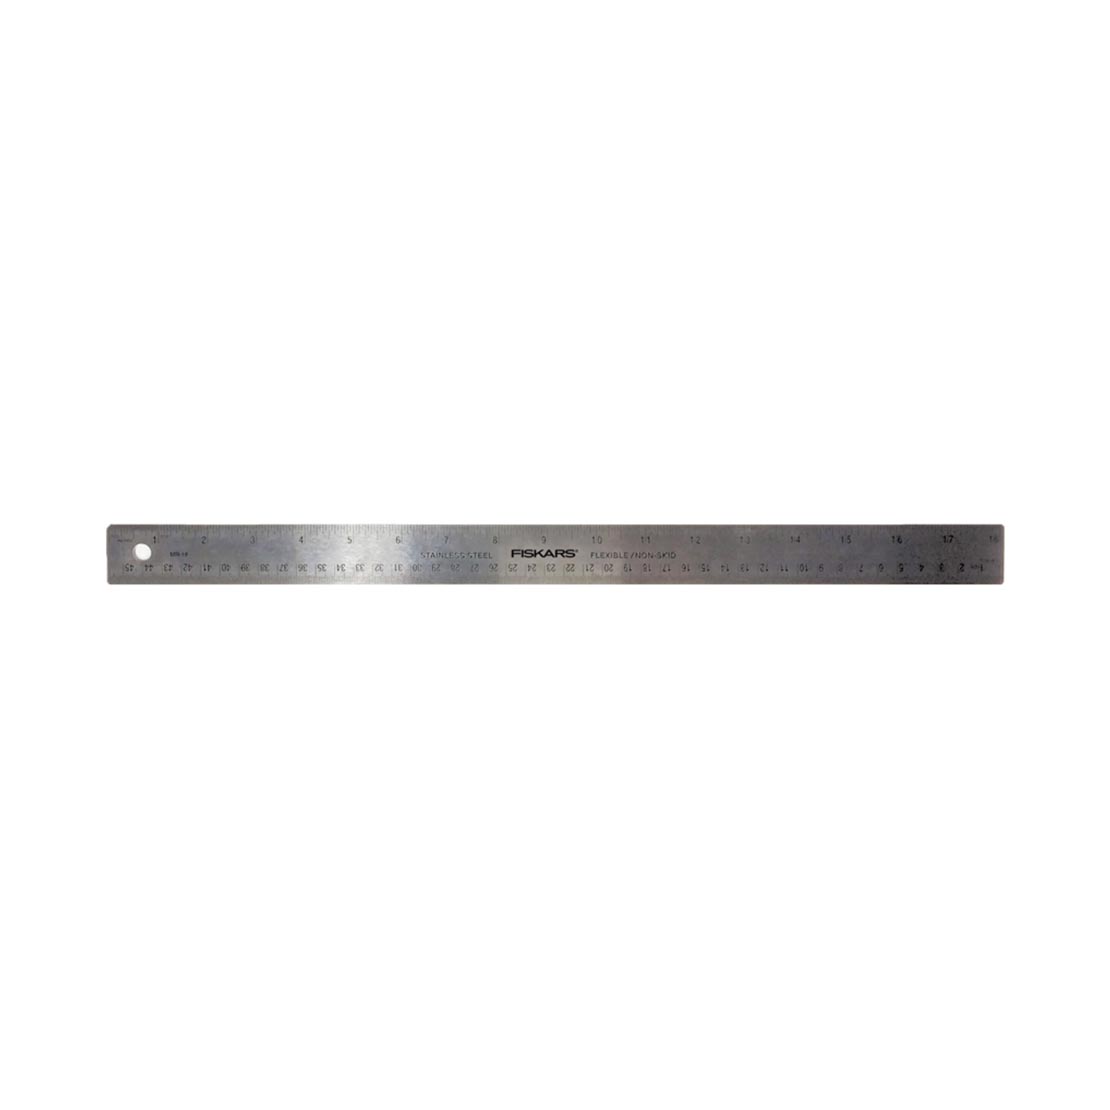 Stainless Steel Ruler 18 English/Metric